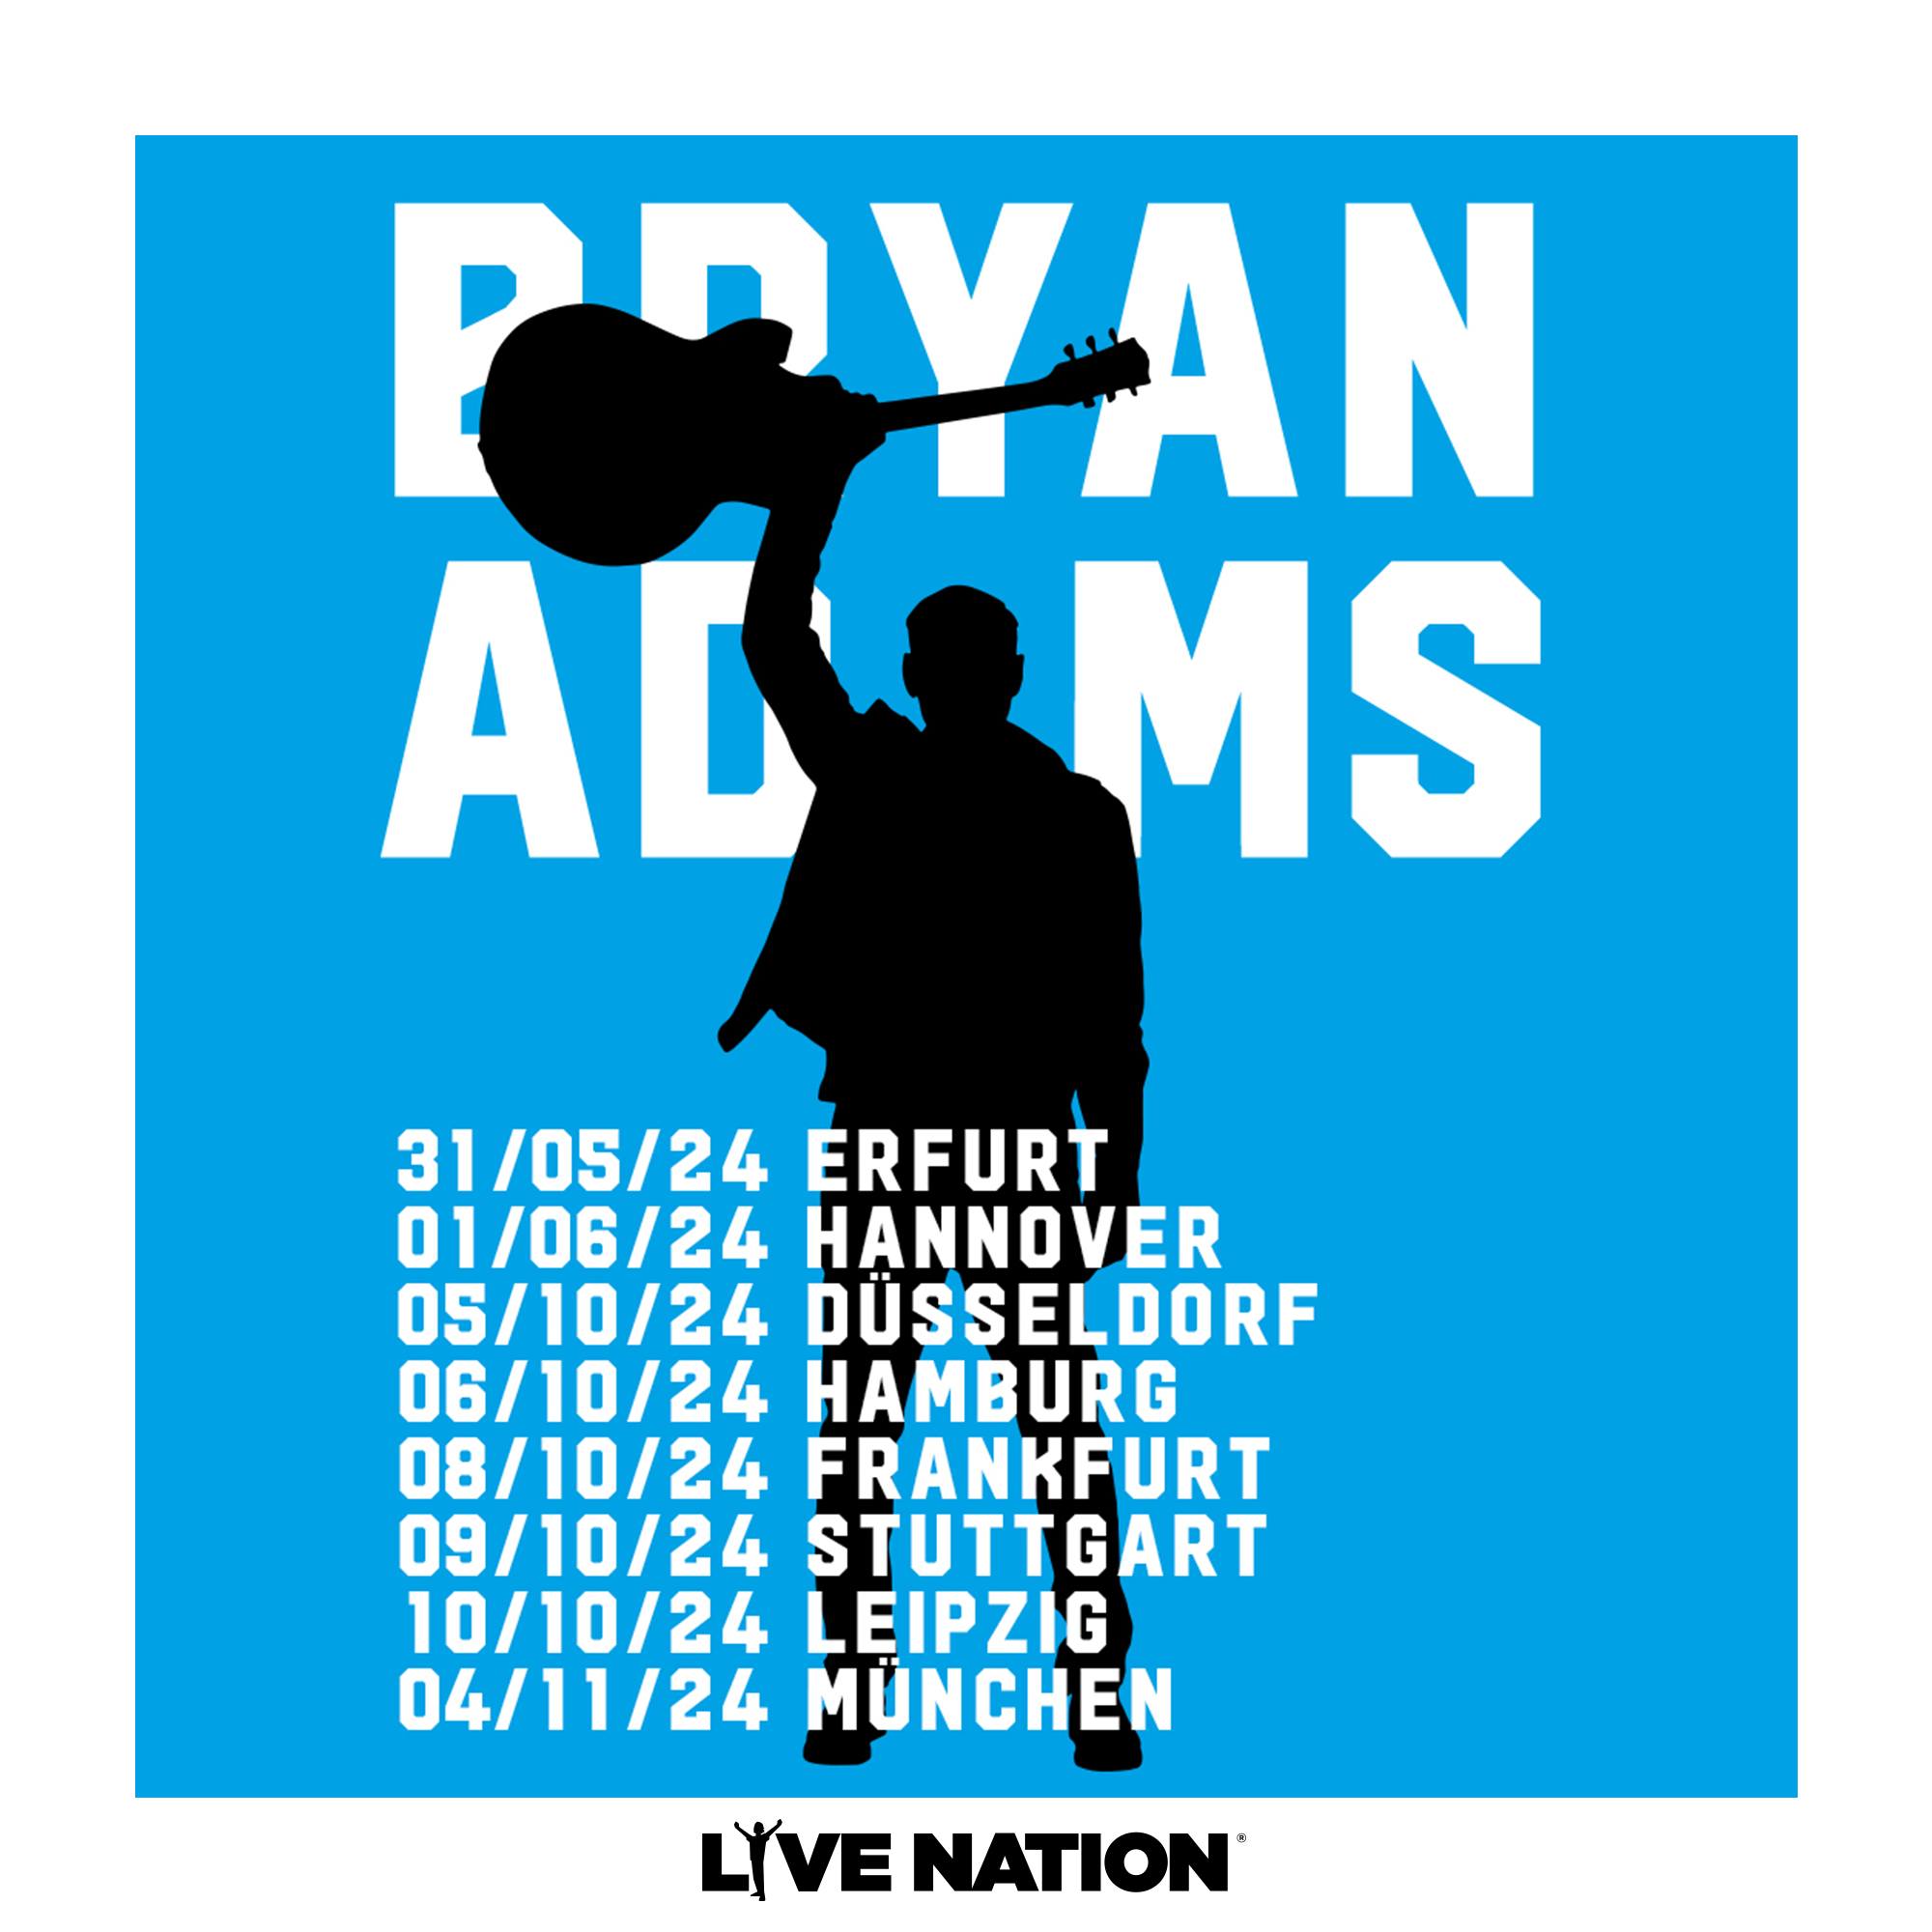 Bryan Adams en Festhalle Frankfurt Tickets